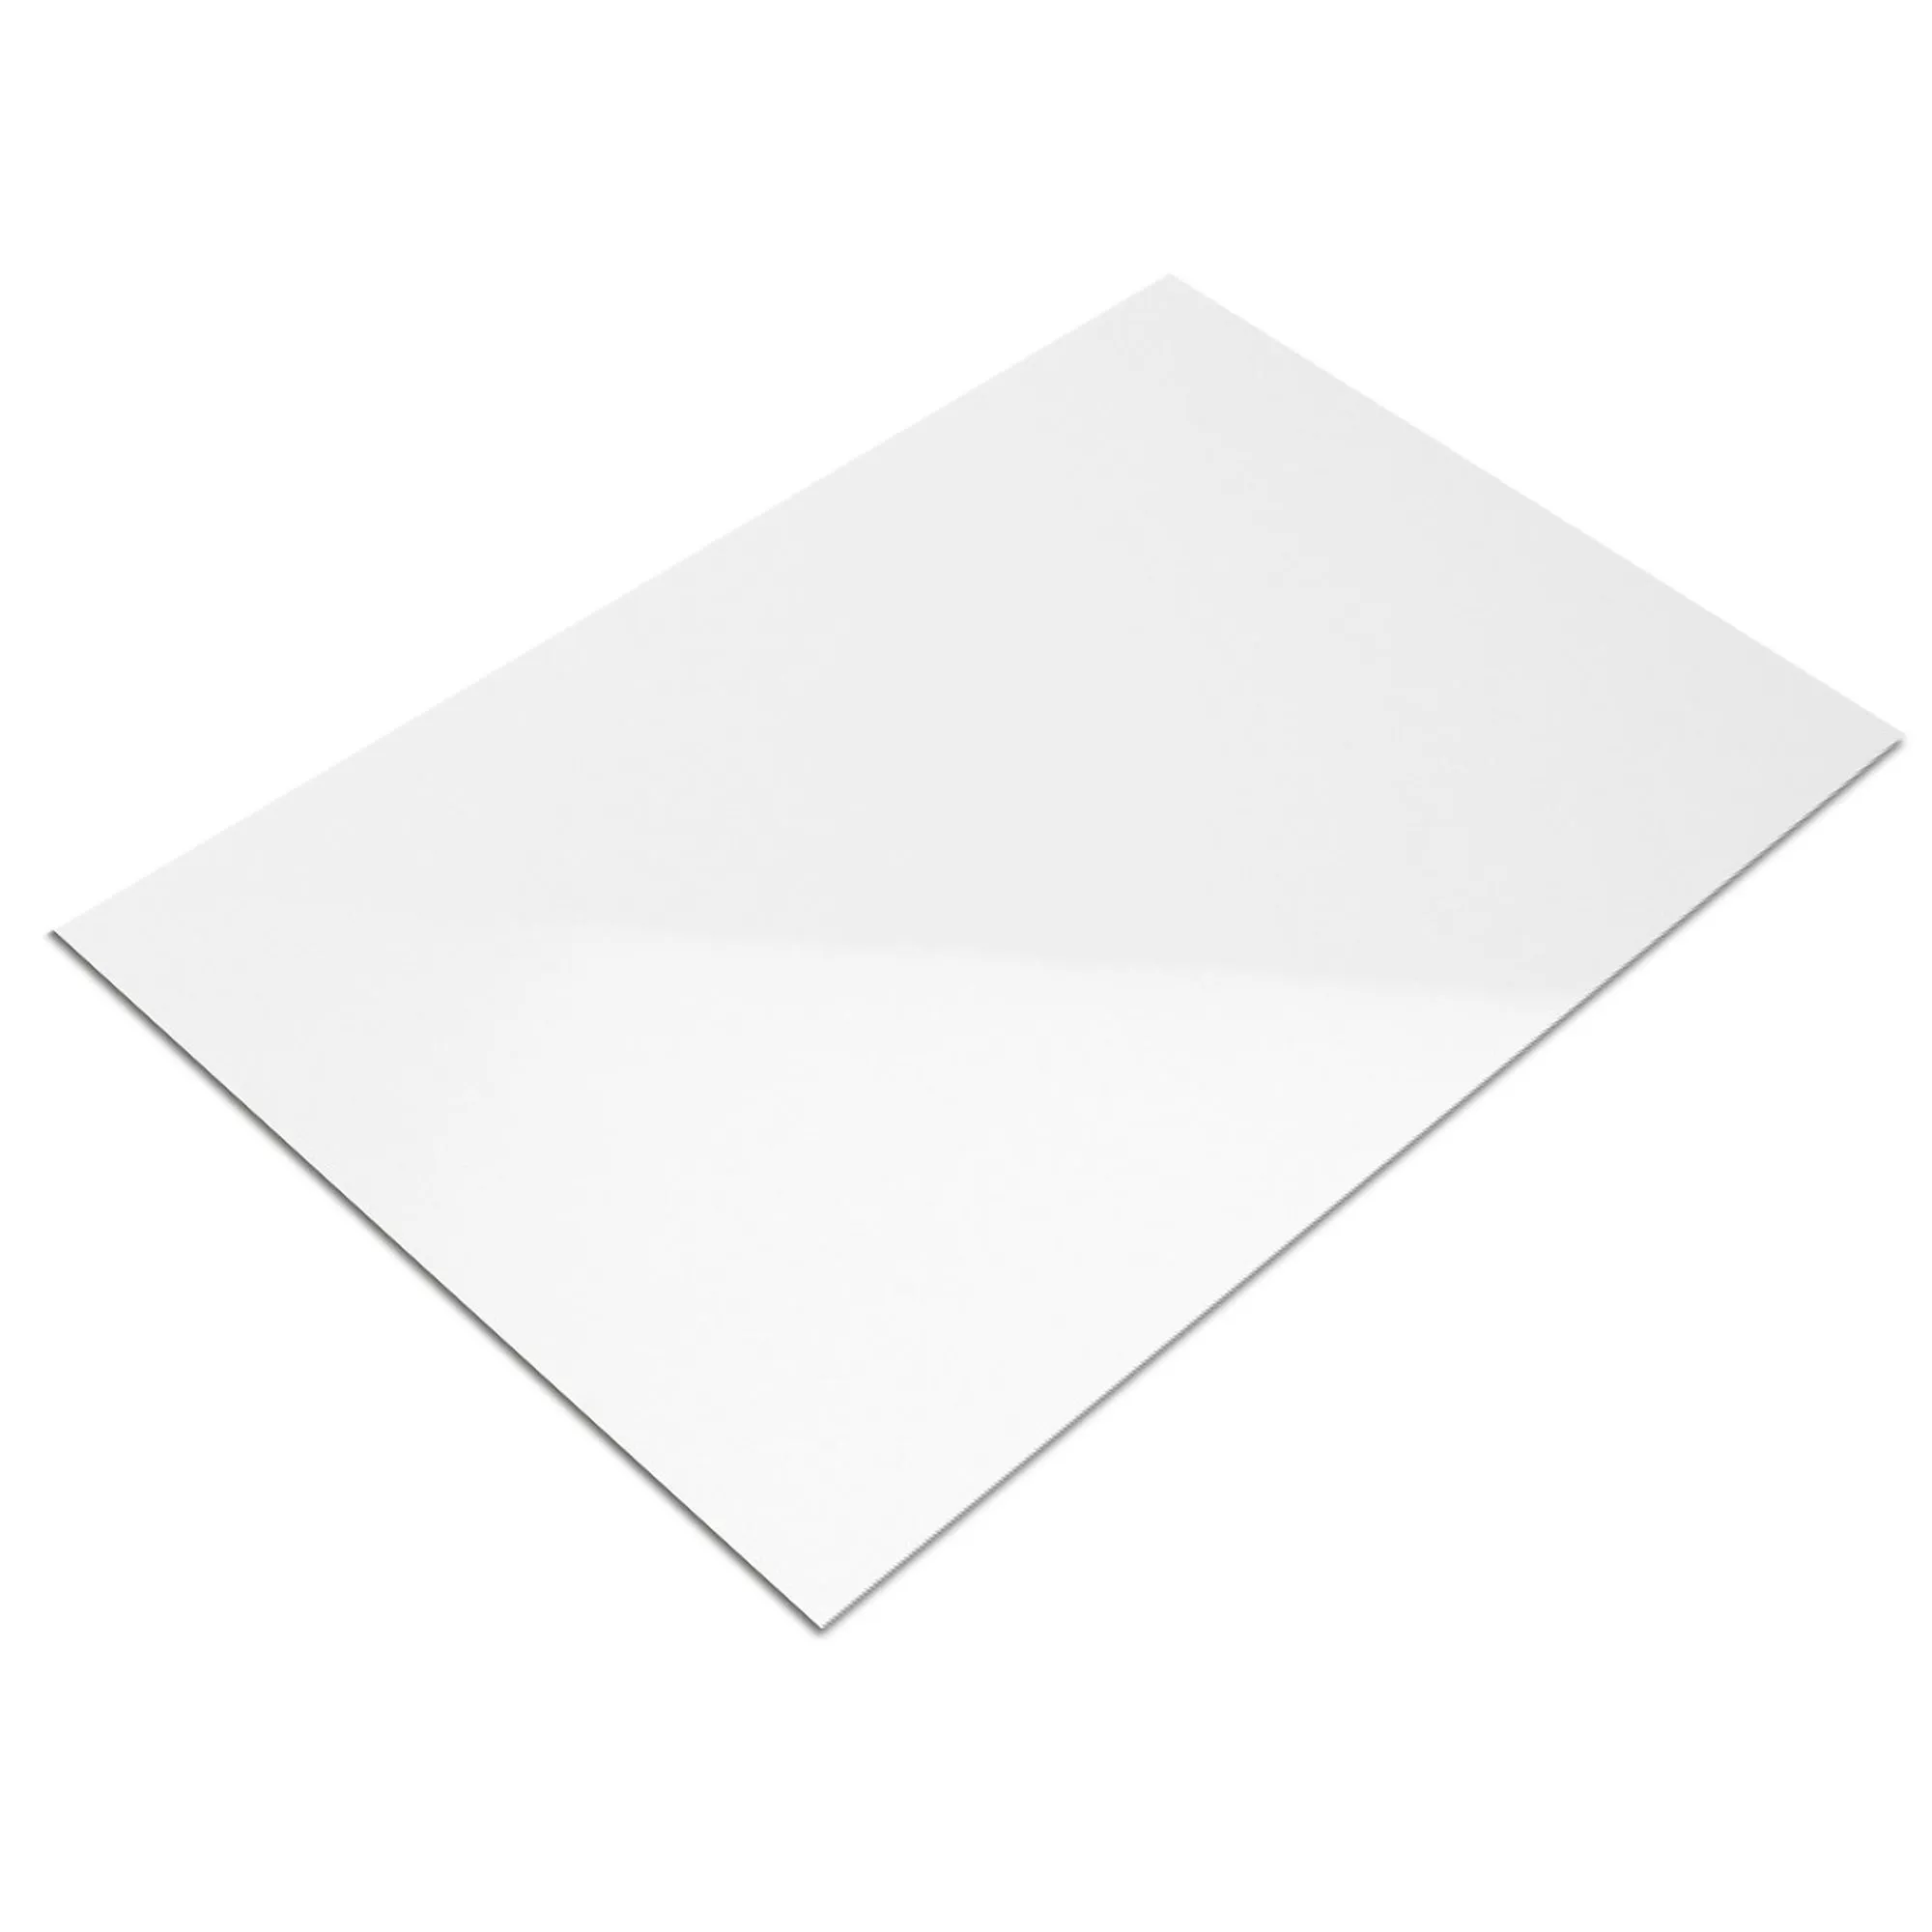 Sample Wall Tiles Fenway White Glossy 25x33cm